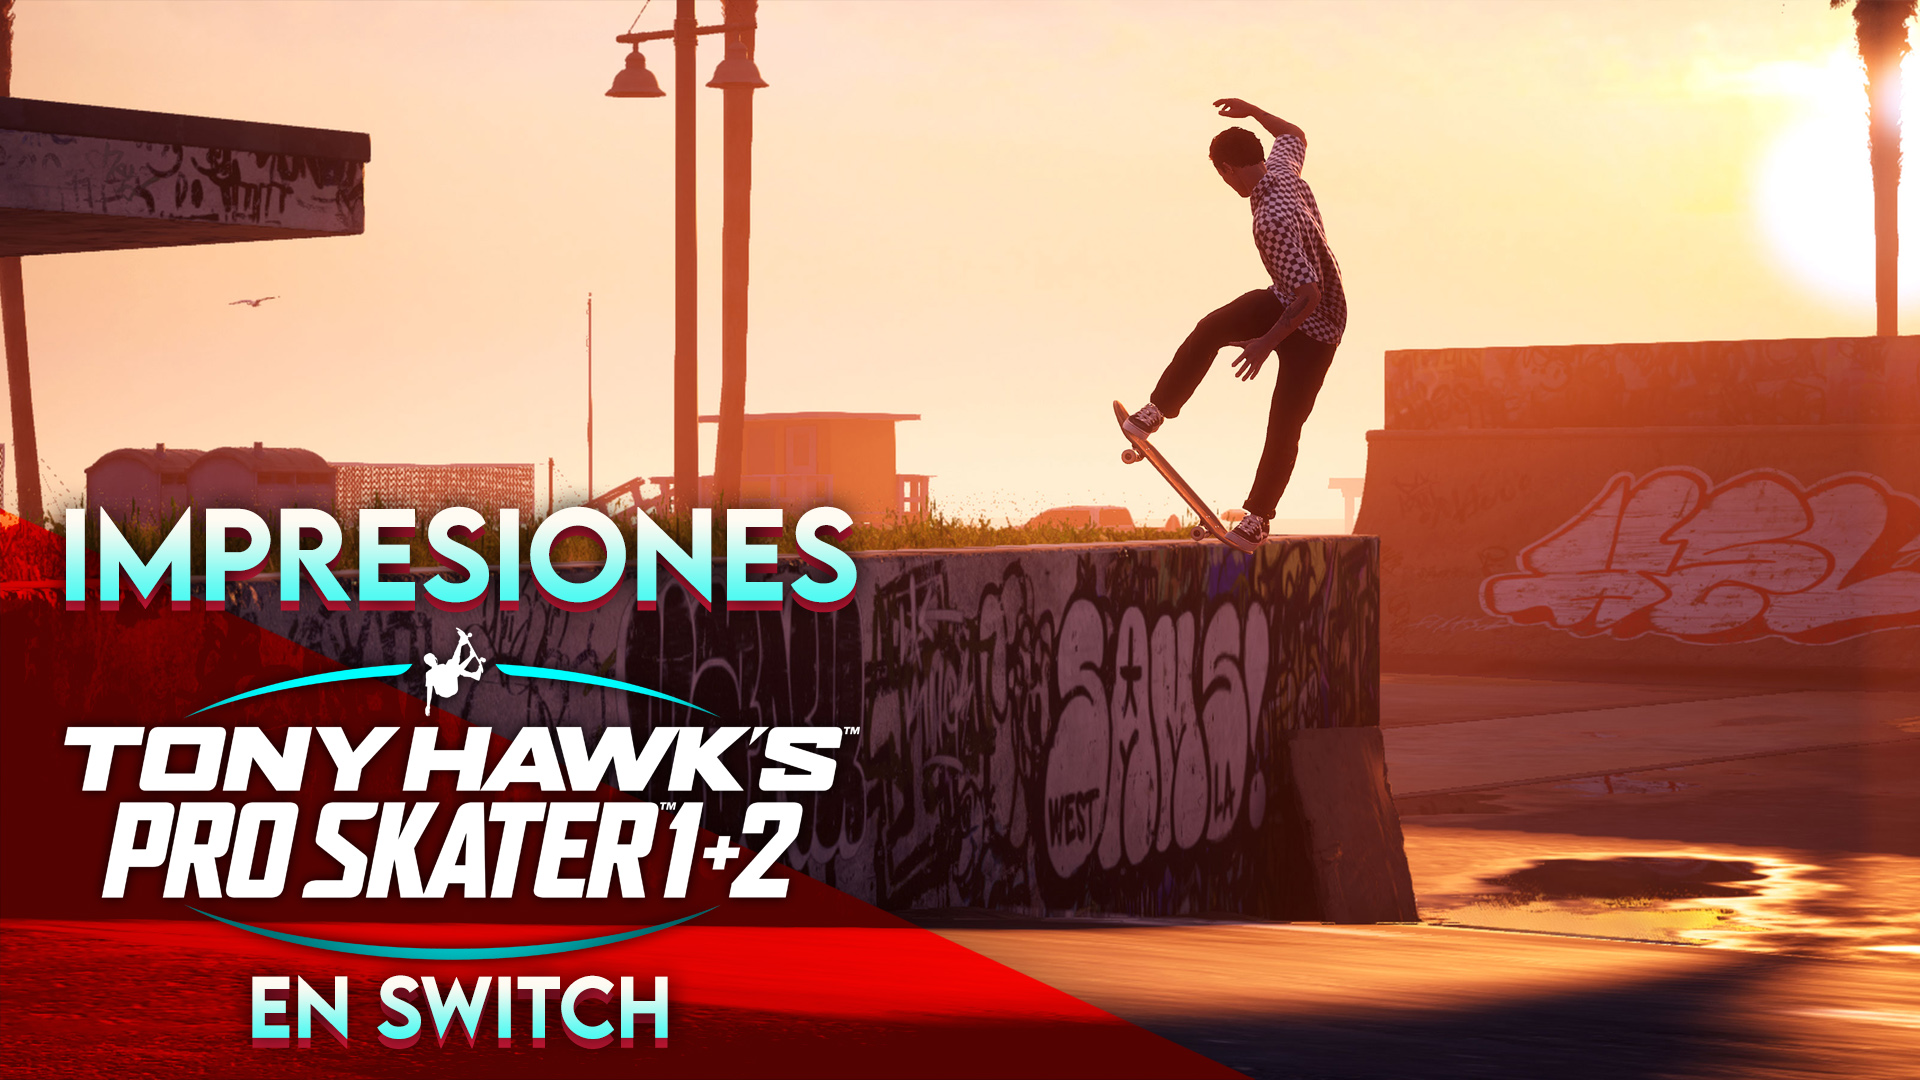 Impresiones Tony Hawk’s Pro Skater 1 + 2 en Nintendo Switch